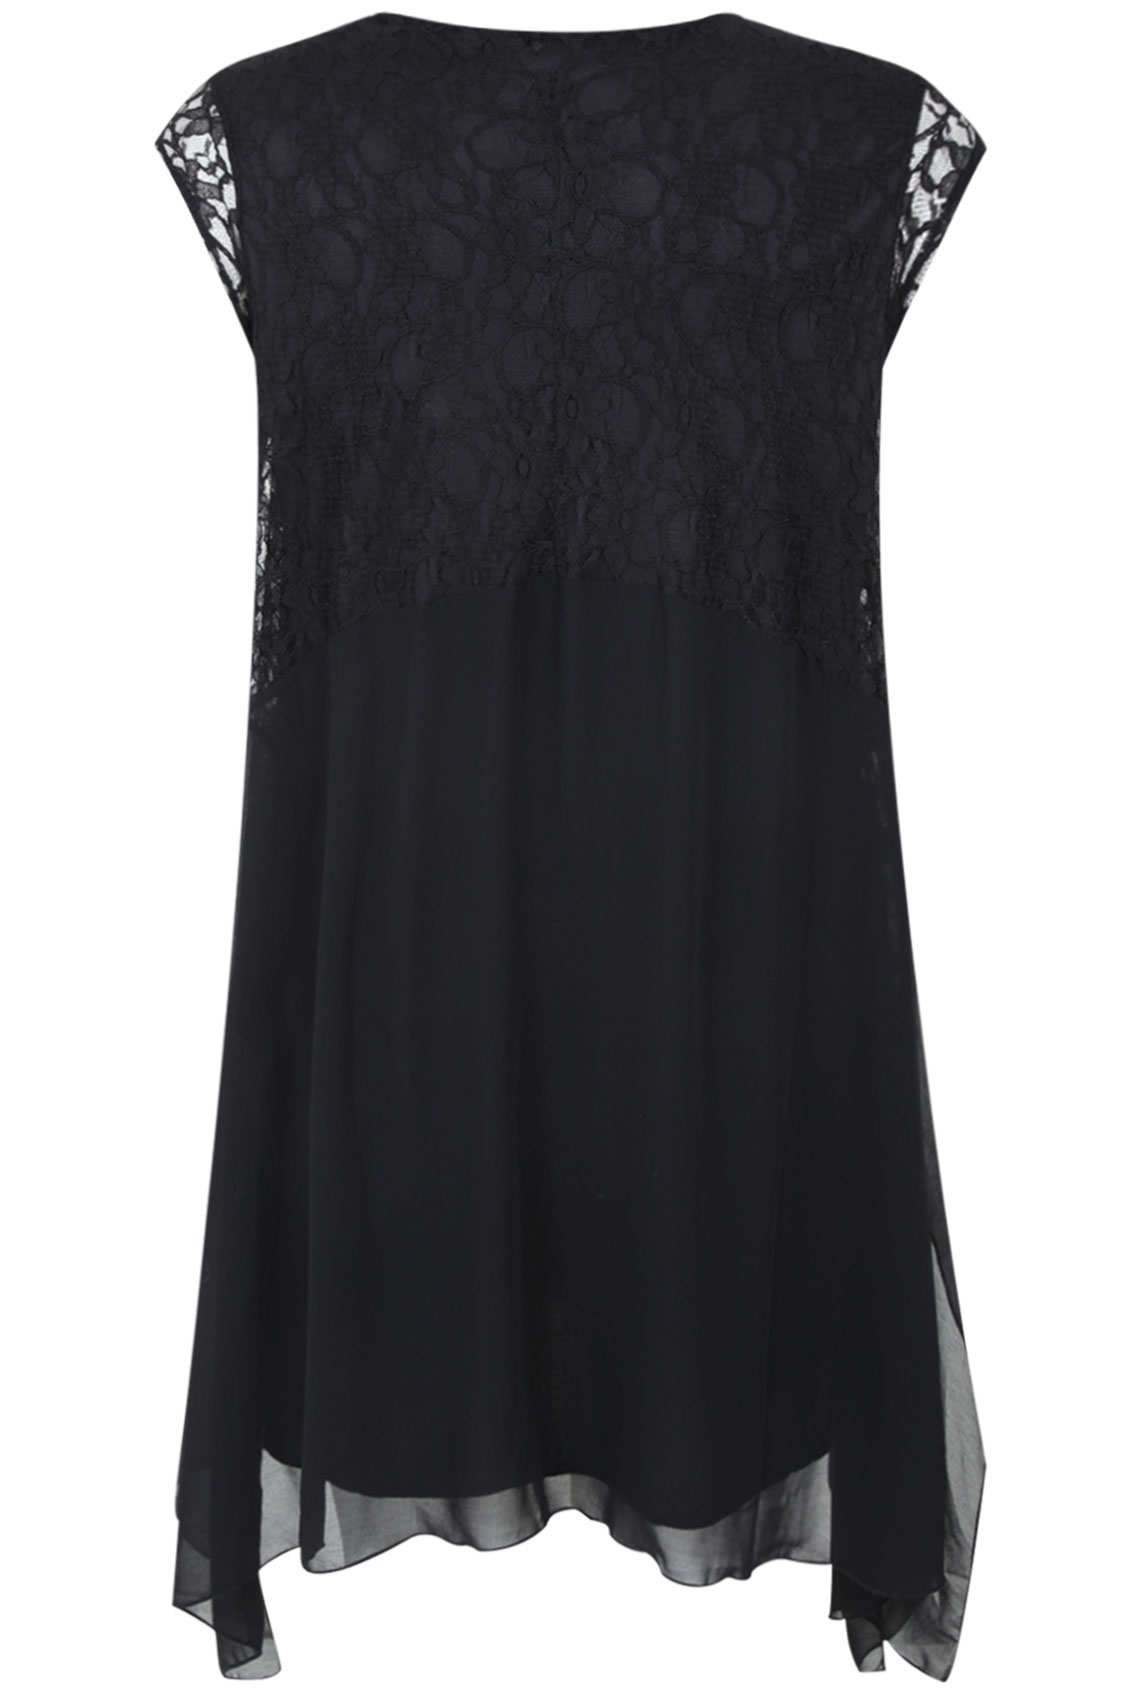 Black Chiffon Tunic Dress With Lace Top Panel And Hanky Hem plus size ...